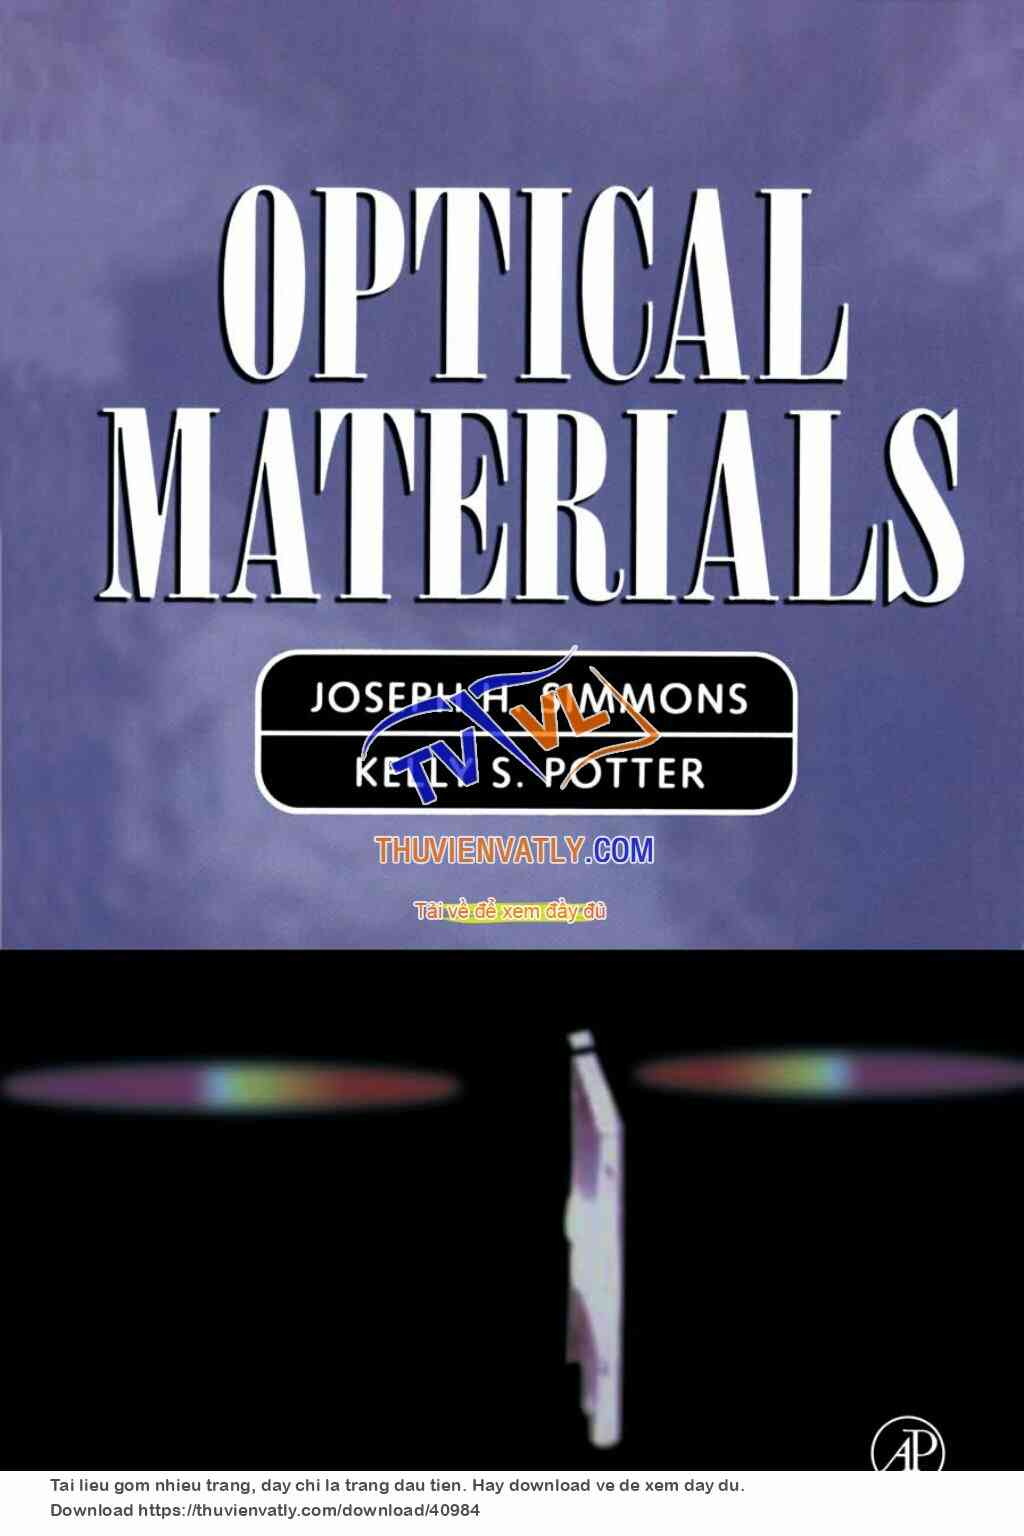 Optical Materials